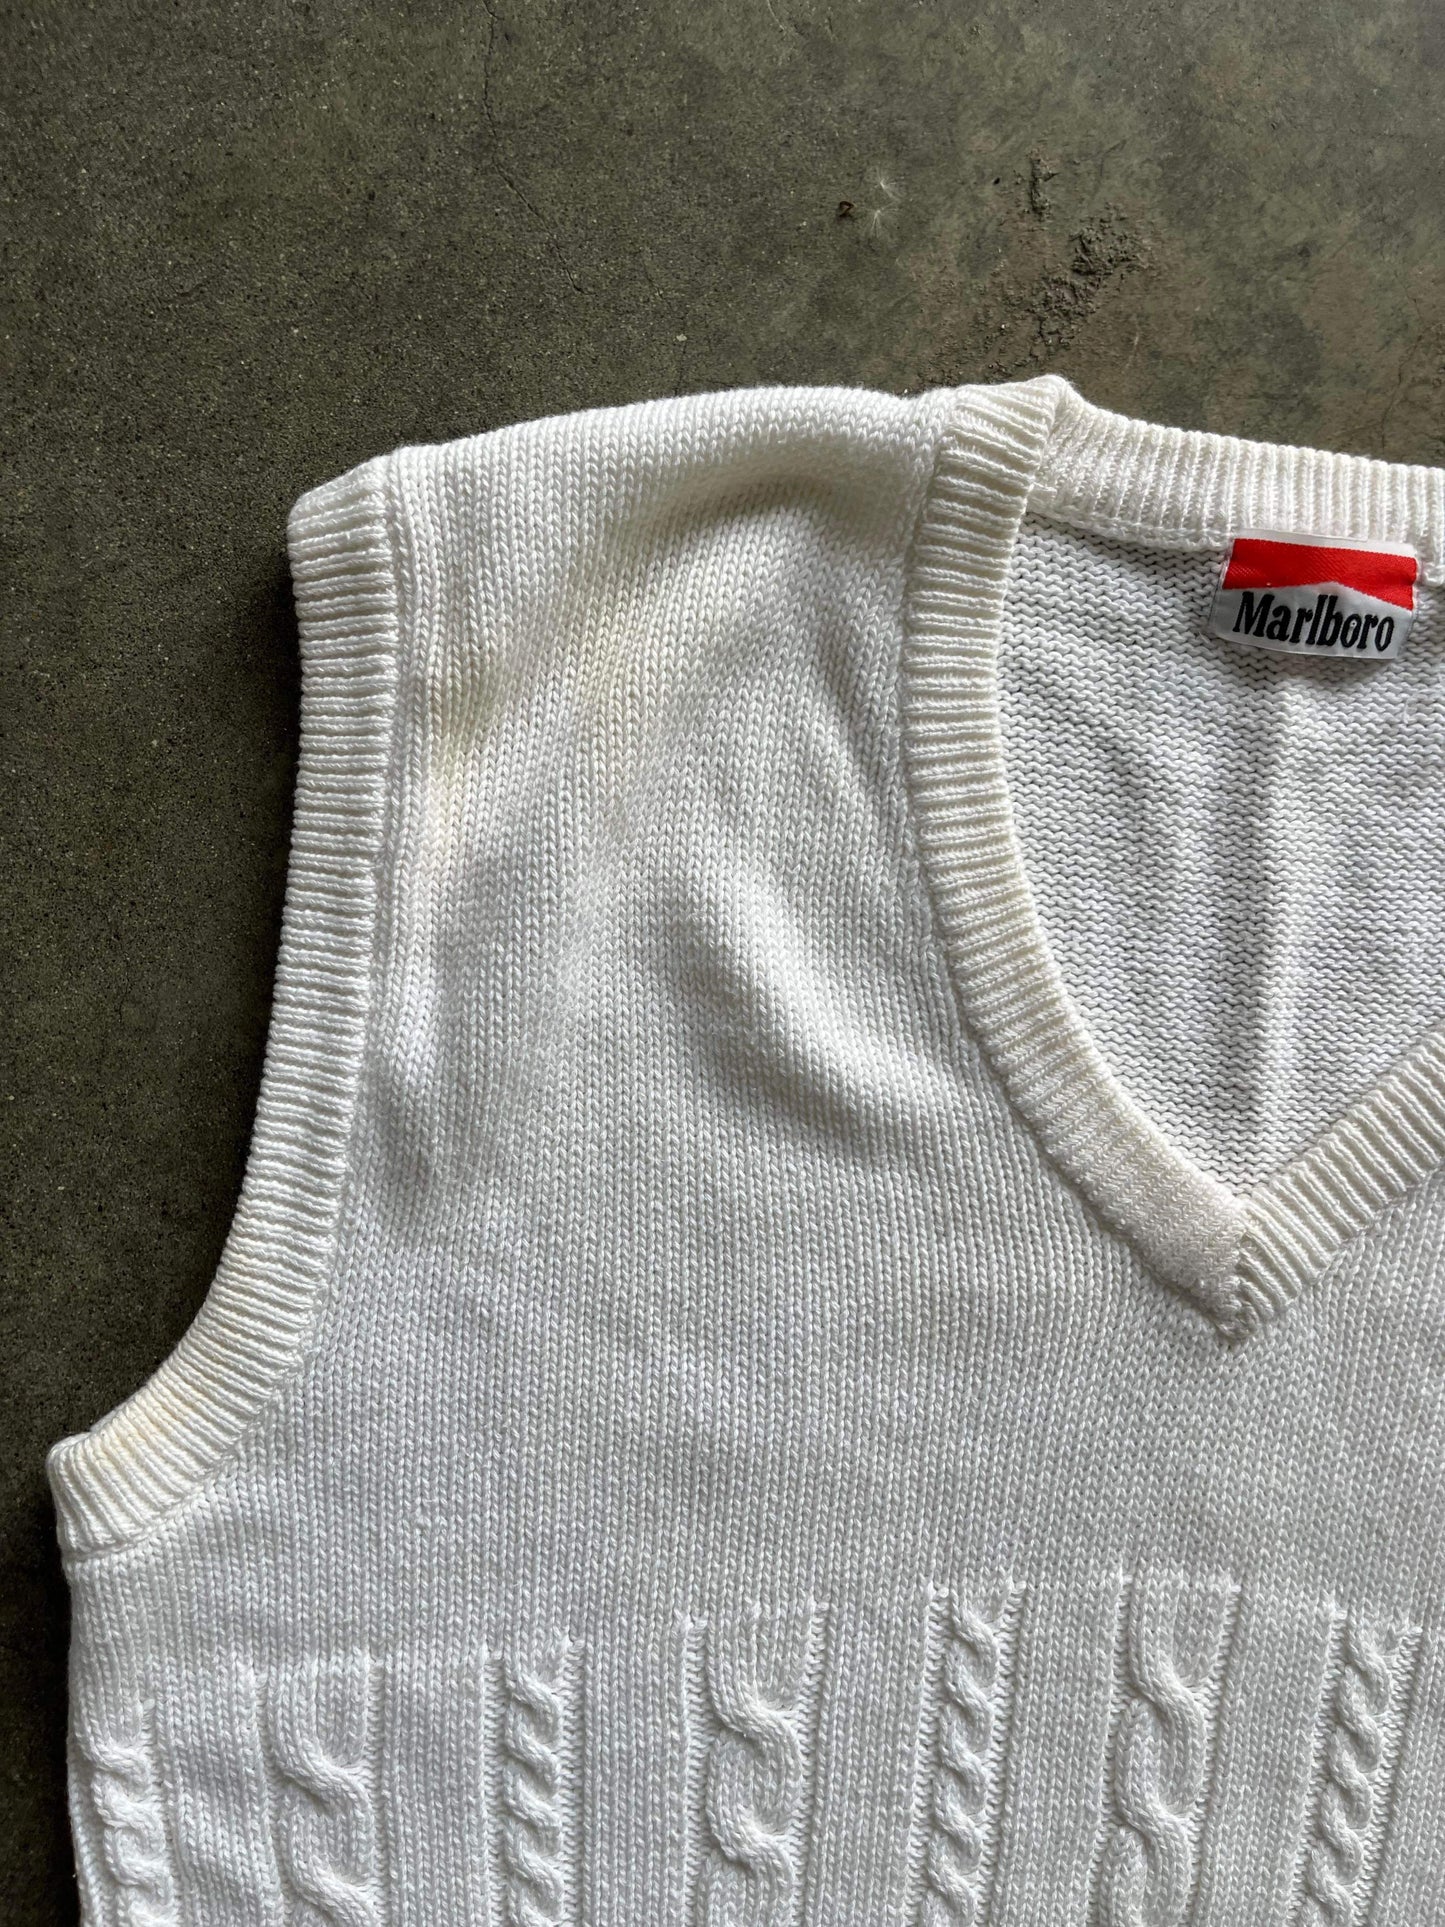 (L) Vintage Marlboro Knitted Vest